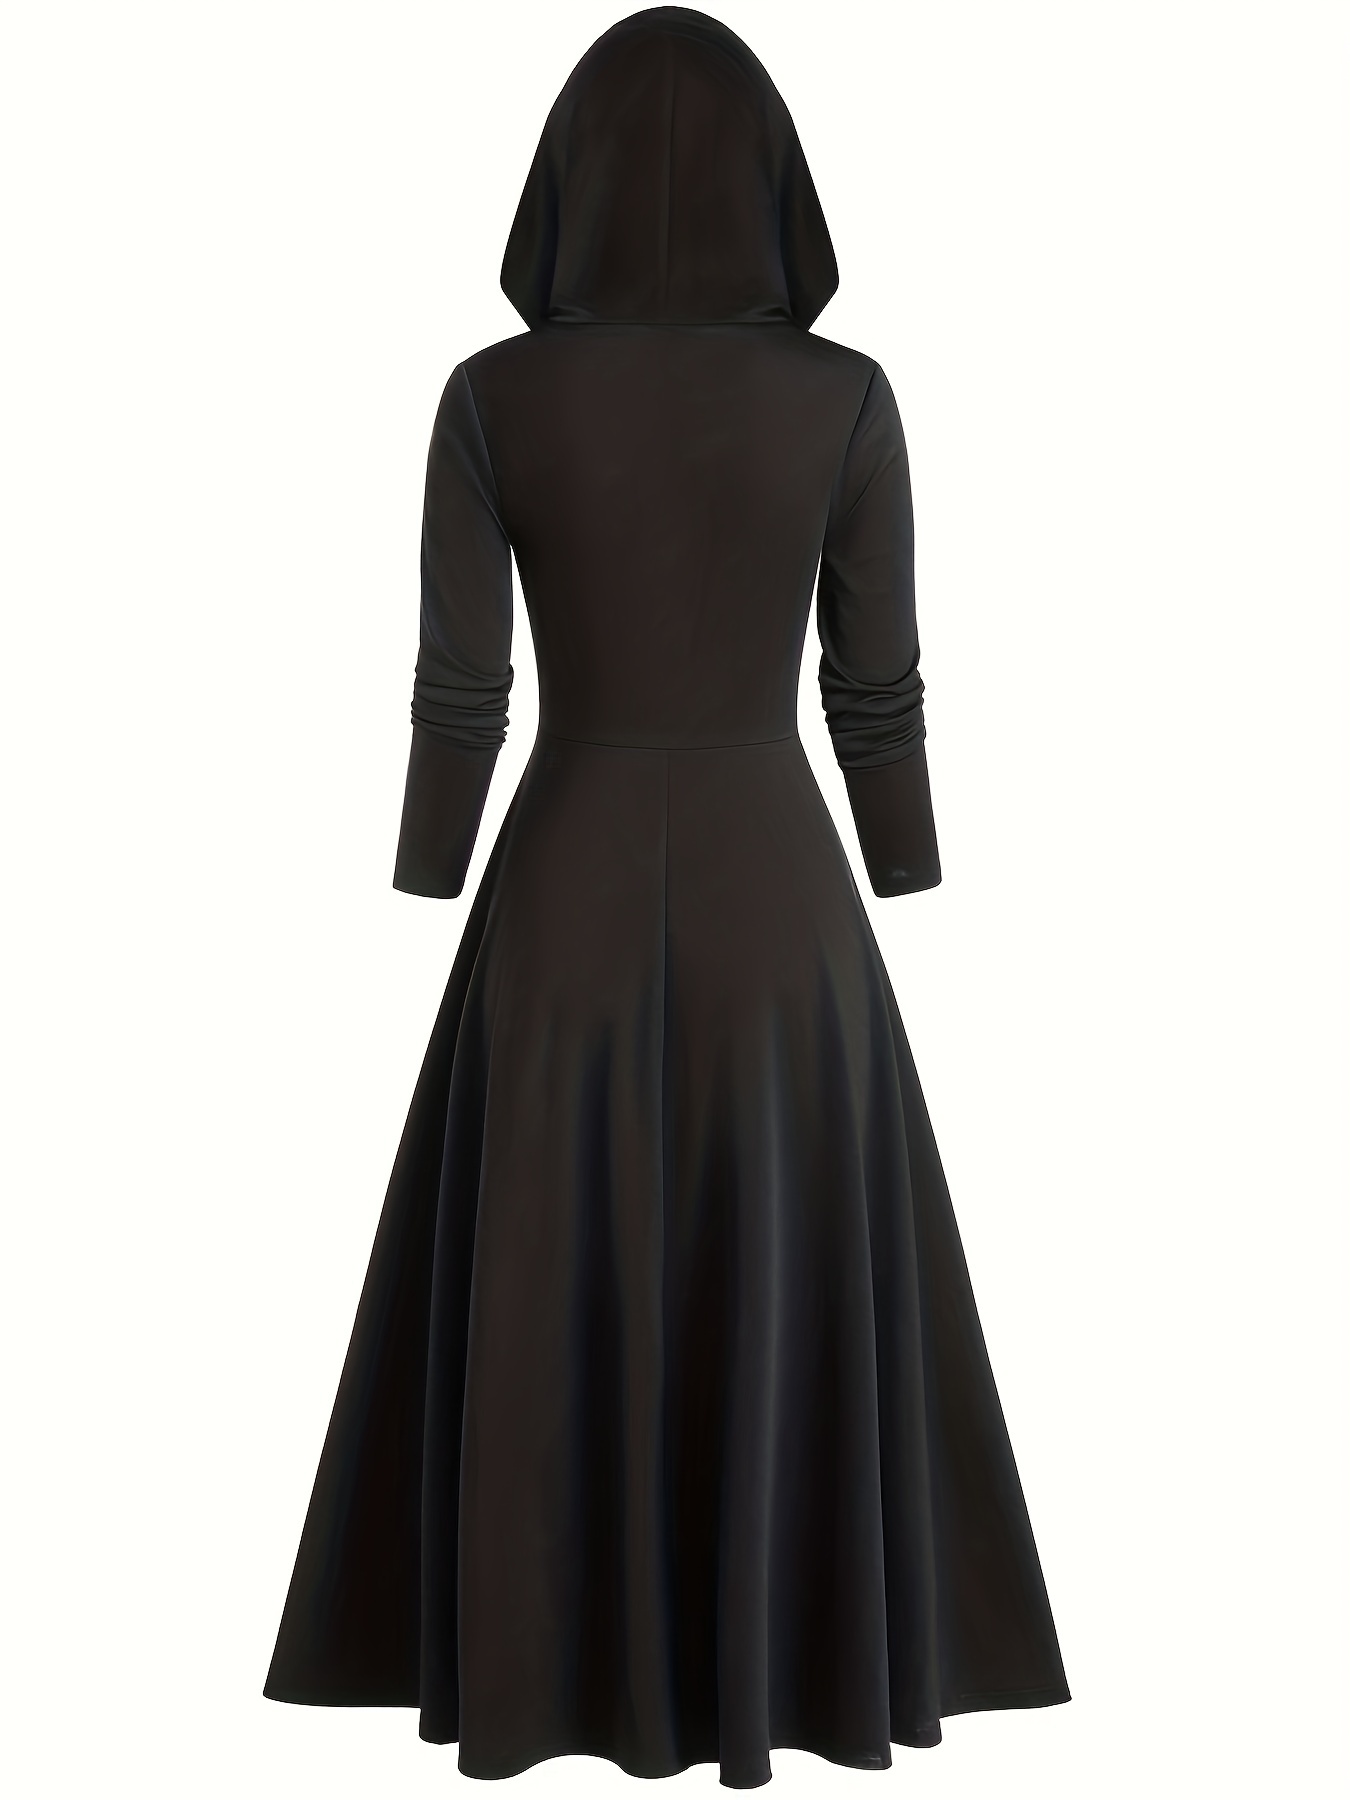 Hooded black dress. Goth hooded sleeveless dress. Steampunk hooded dress. Gothic  dress. Elven clothes. Futuristic dress. Festival dress